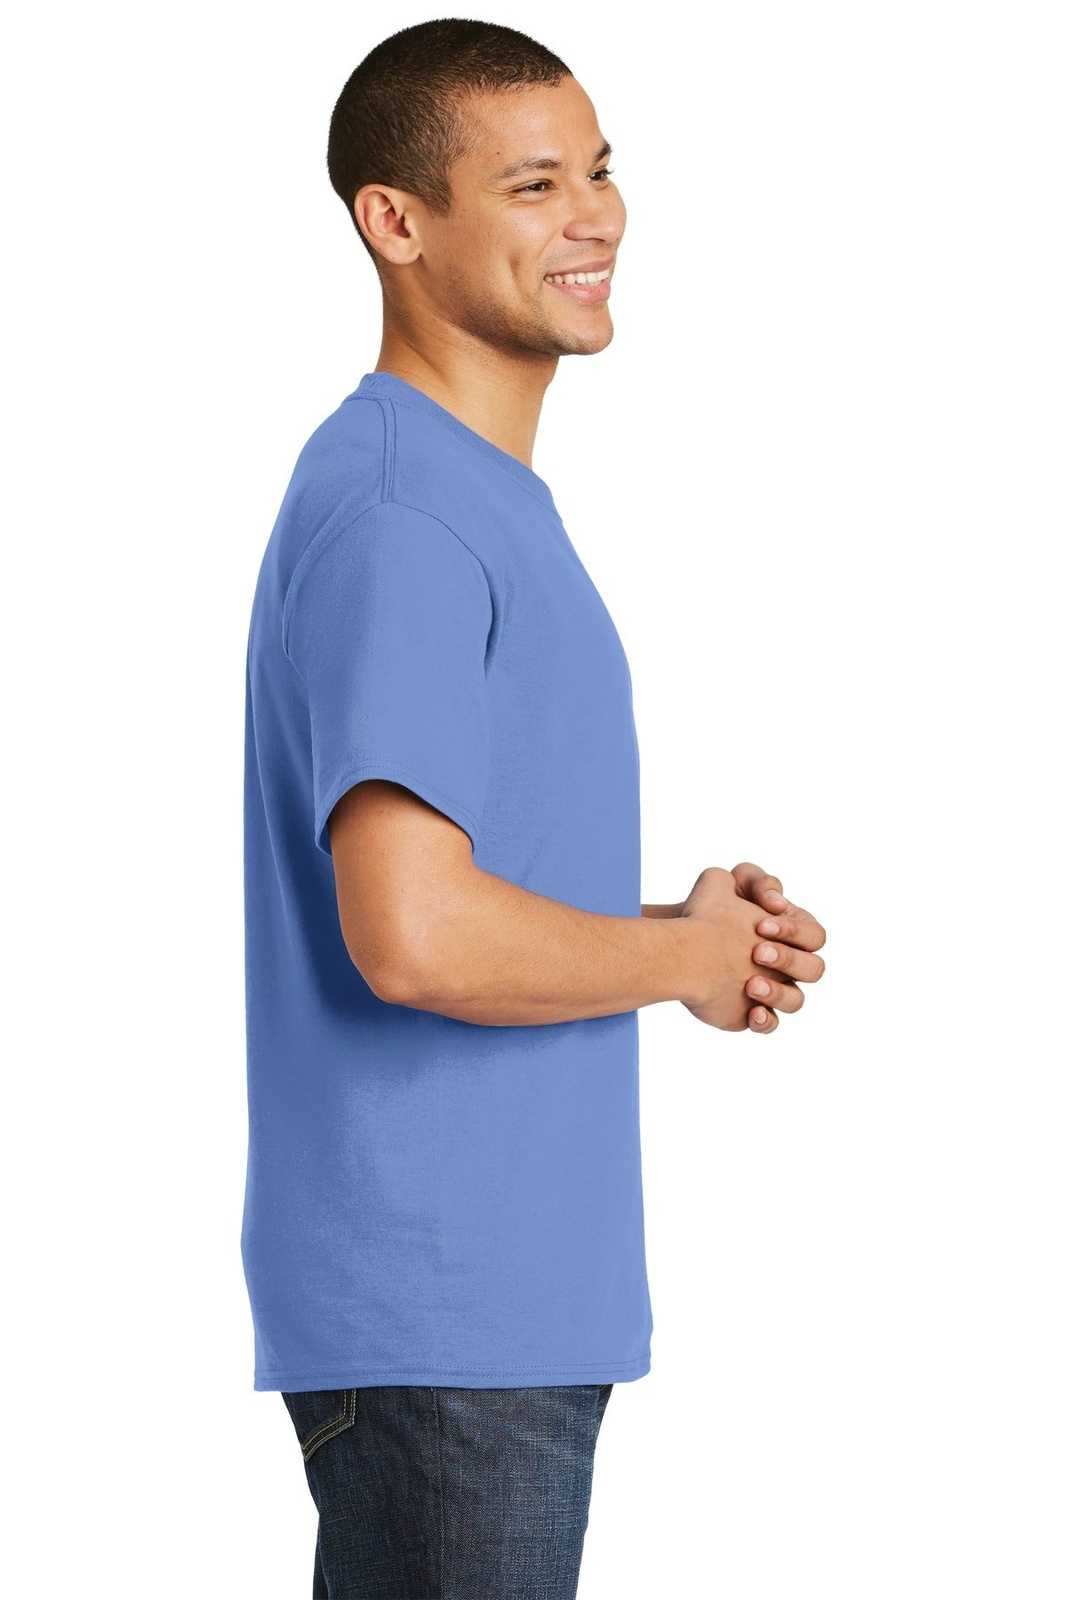 Hanes 5180 Beefy-T 100% Cotton T-Shirt - Carolina Blue - HIT a Double